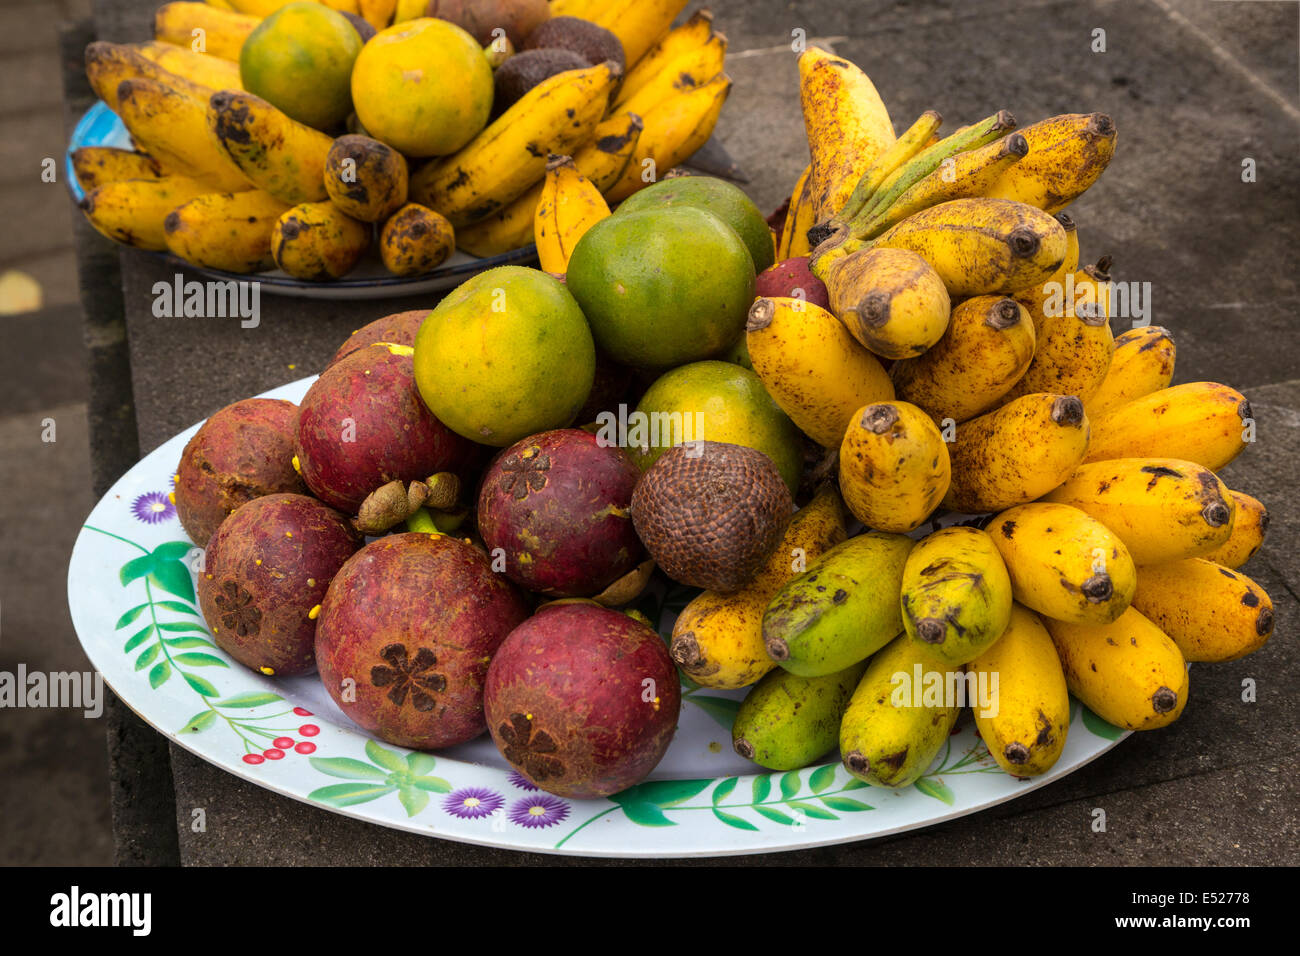 Jatiluwih, Bali, Indonesia.  Mixed Fruits: Mangosteens, Snake Fruit, Bananas, Oranges. Stock Photo